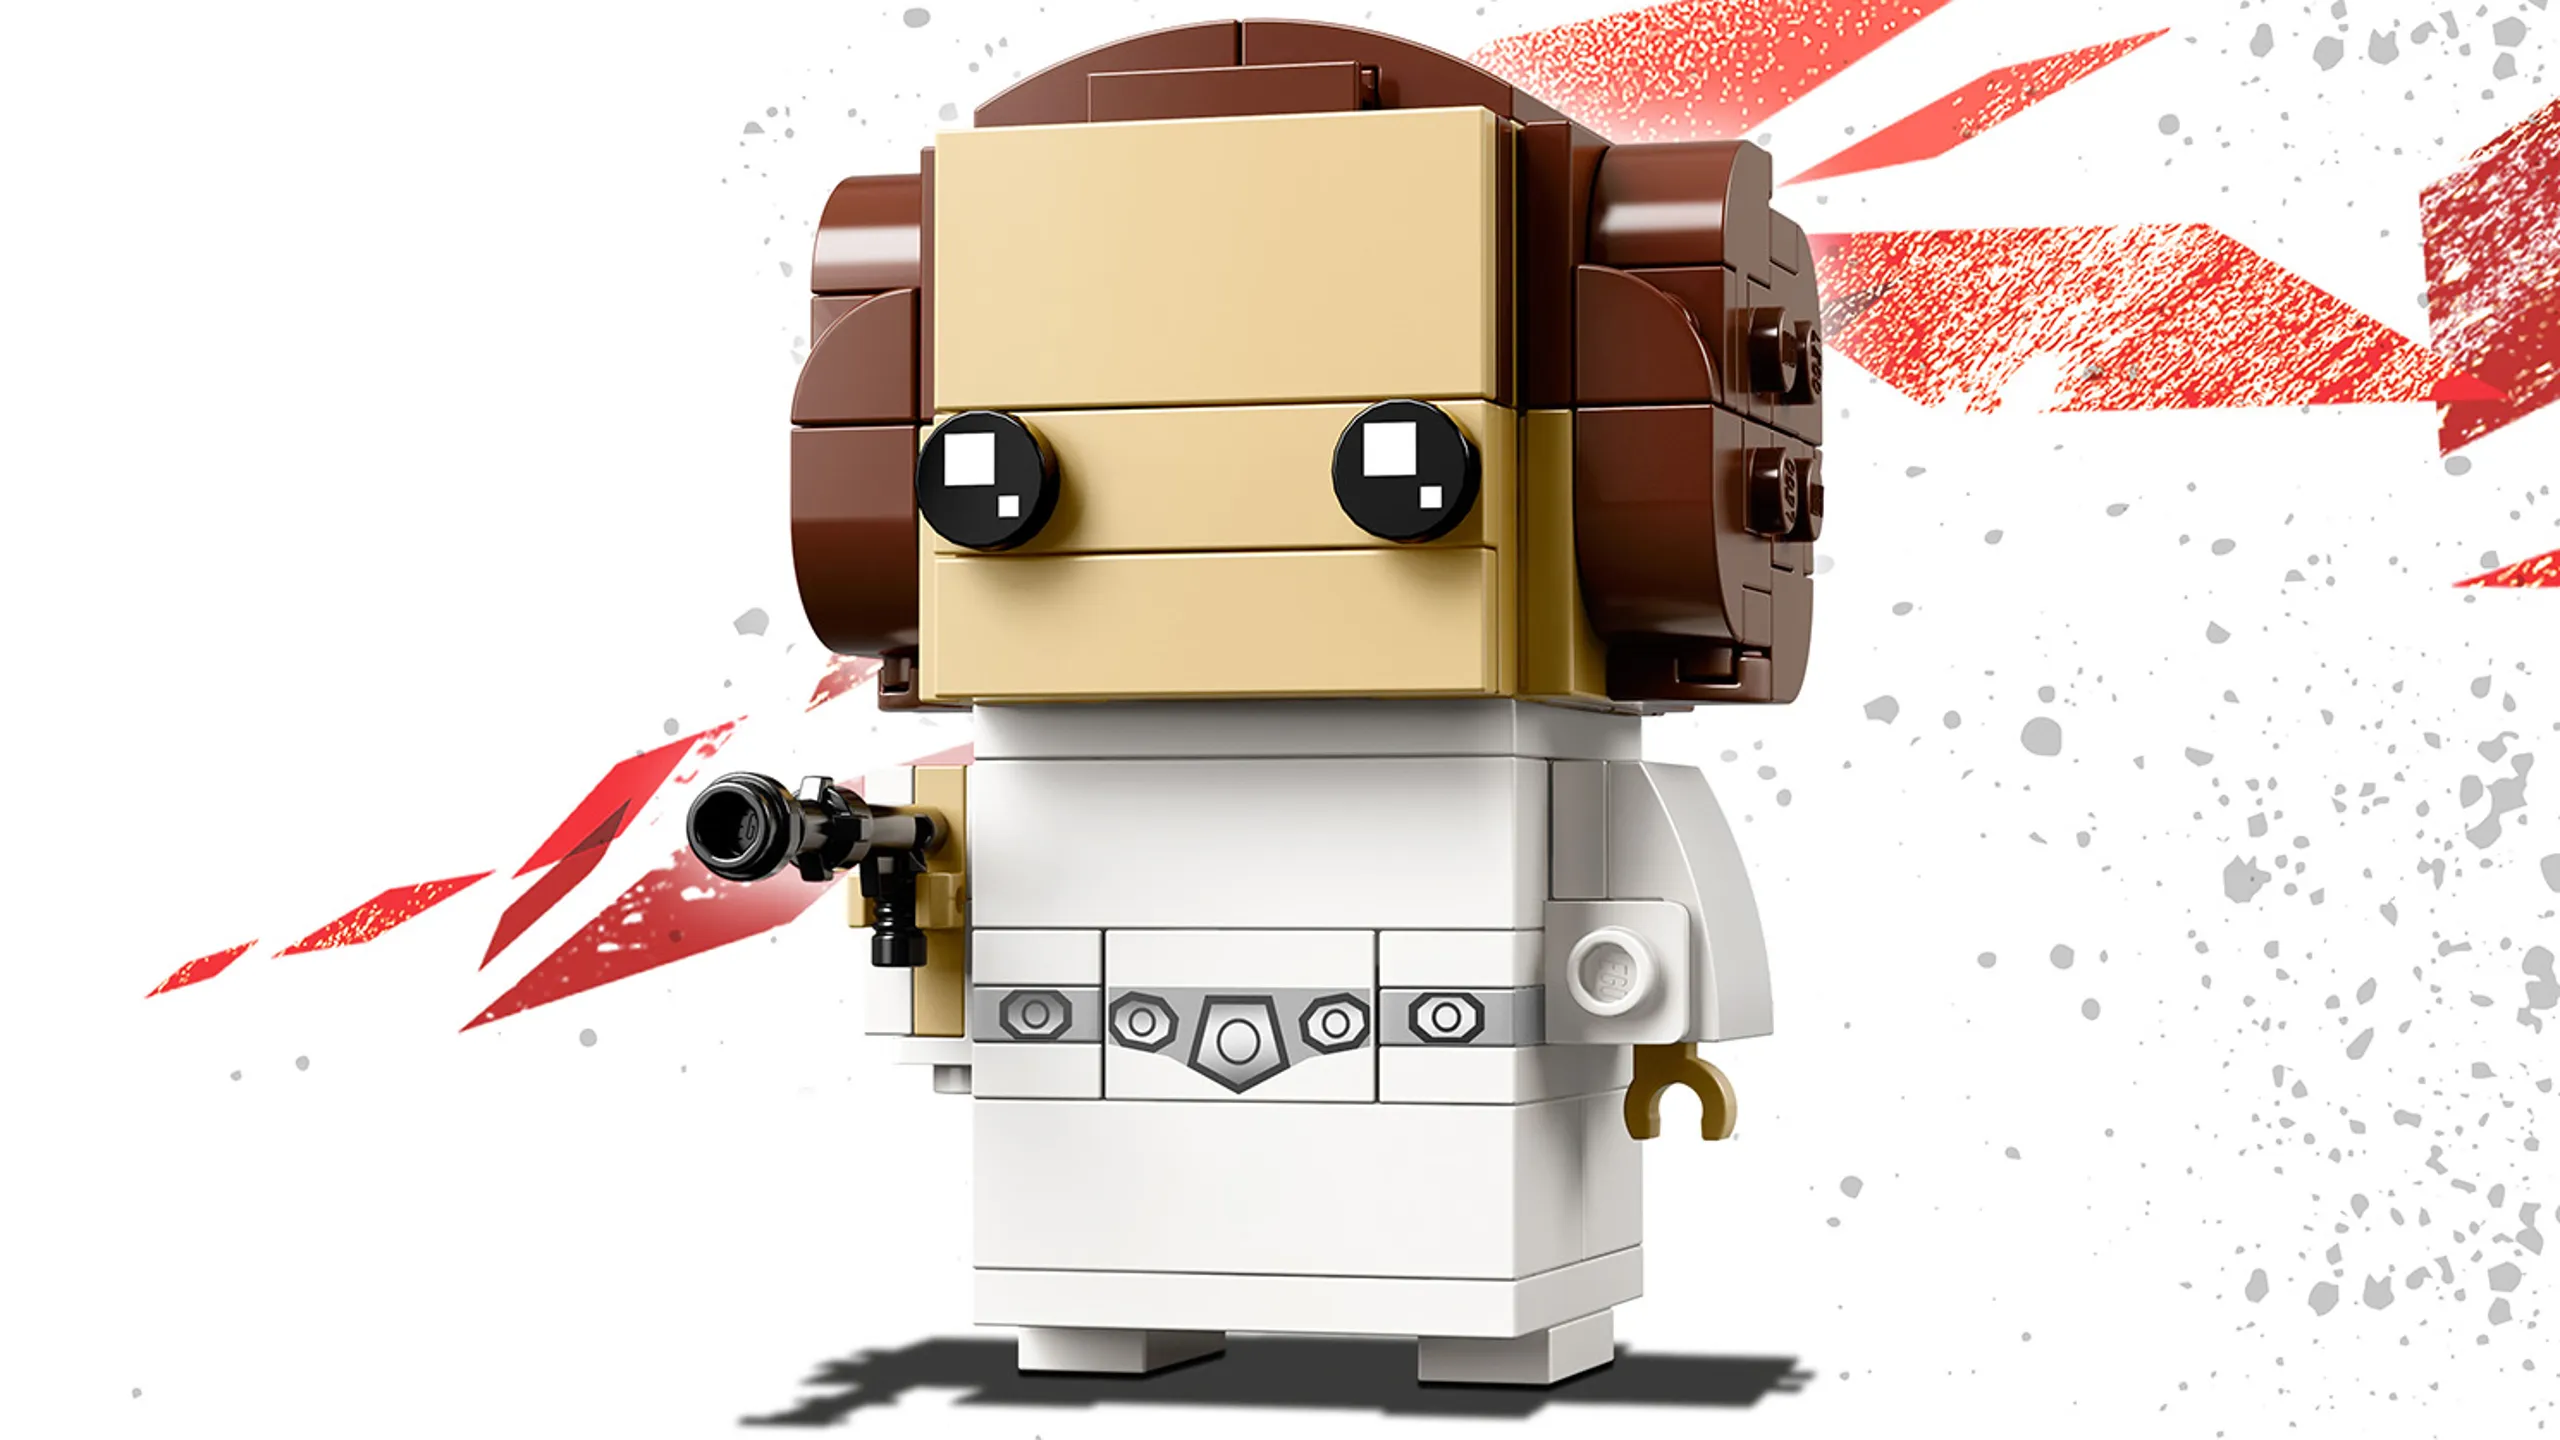 LEGO Brickheadz - 41628 Princess Leia Organa - Build a LEGO Brickheadz version of Princess Leia from the movie Star Wars: Episode V The Empire Strikes Back and display on a baseplate.